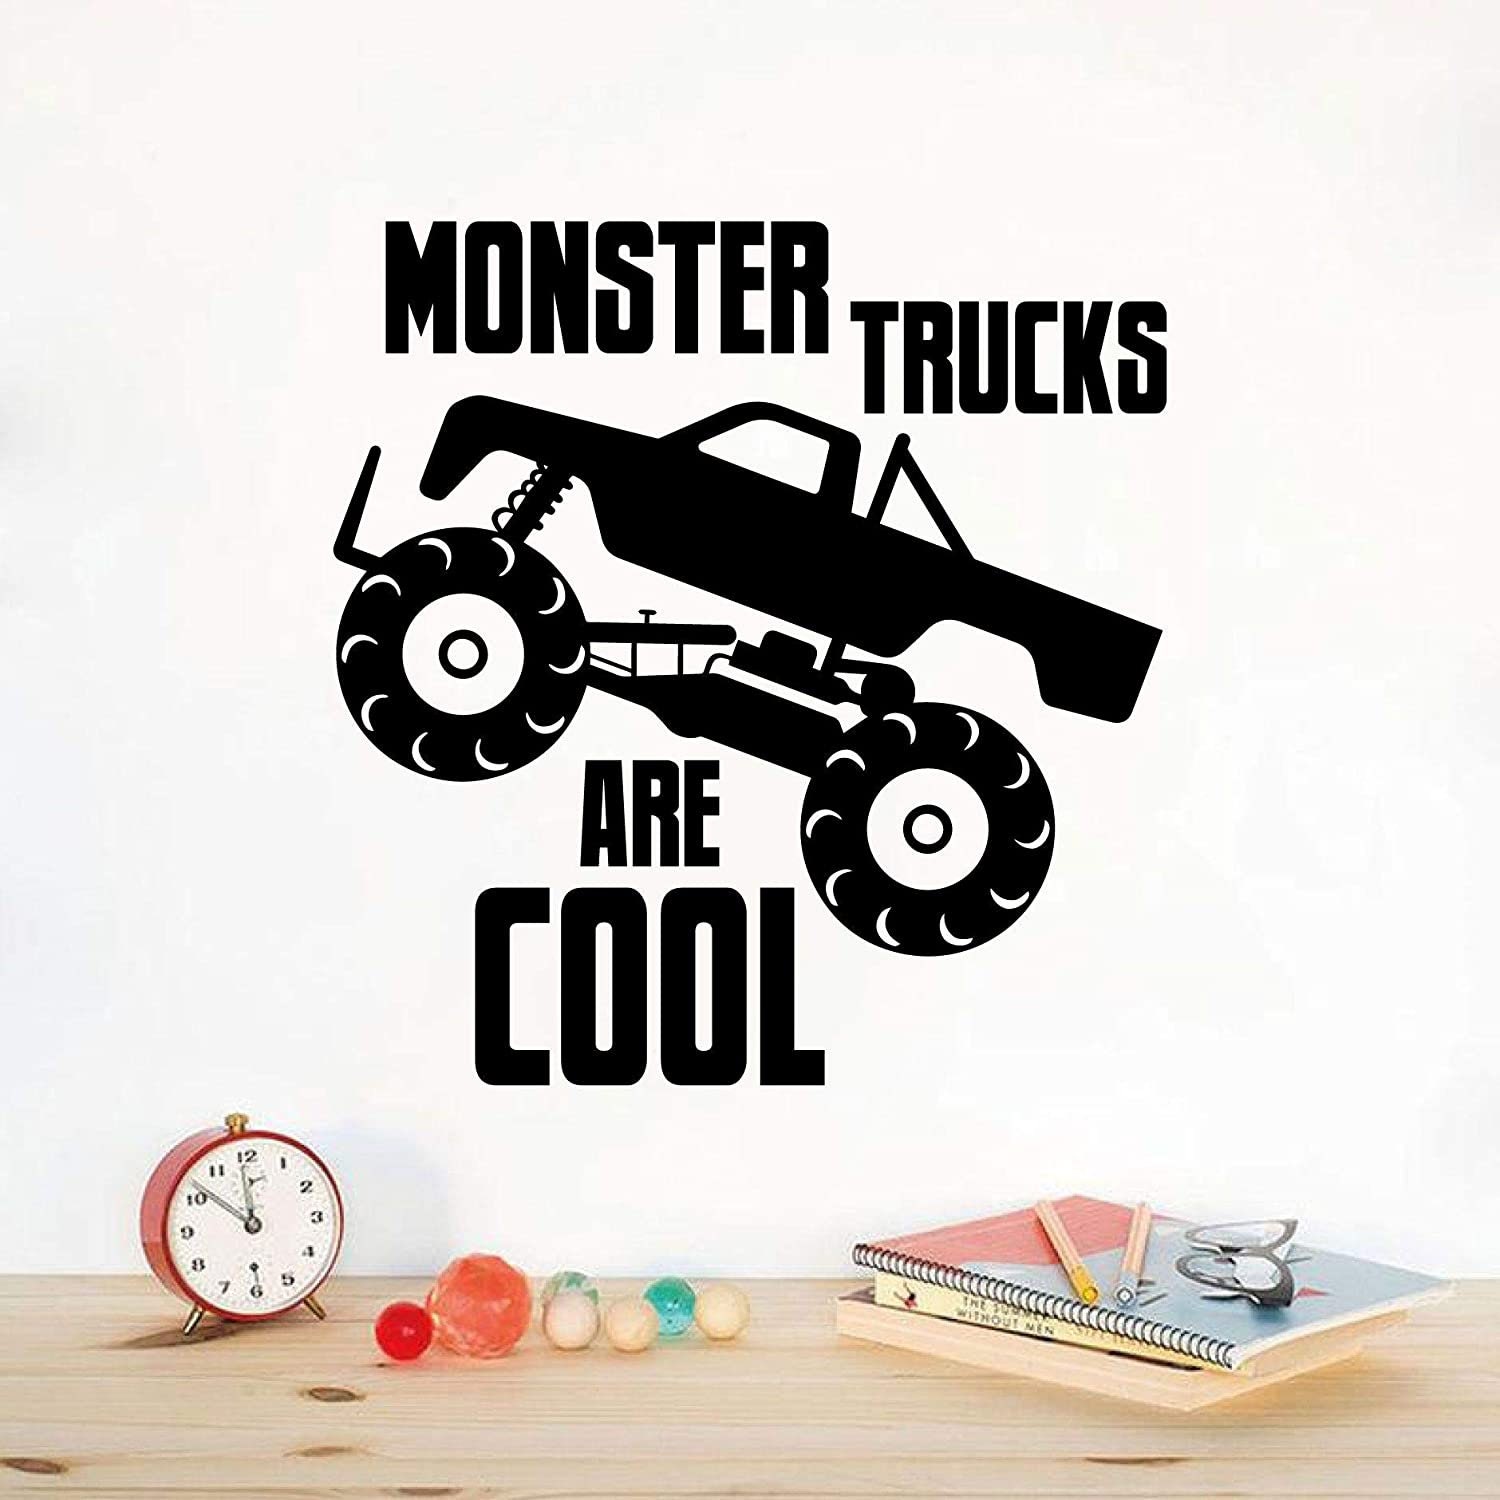 cool monster truck names